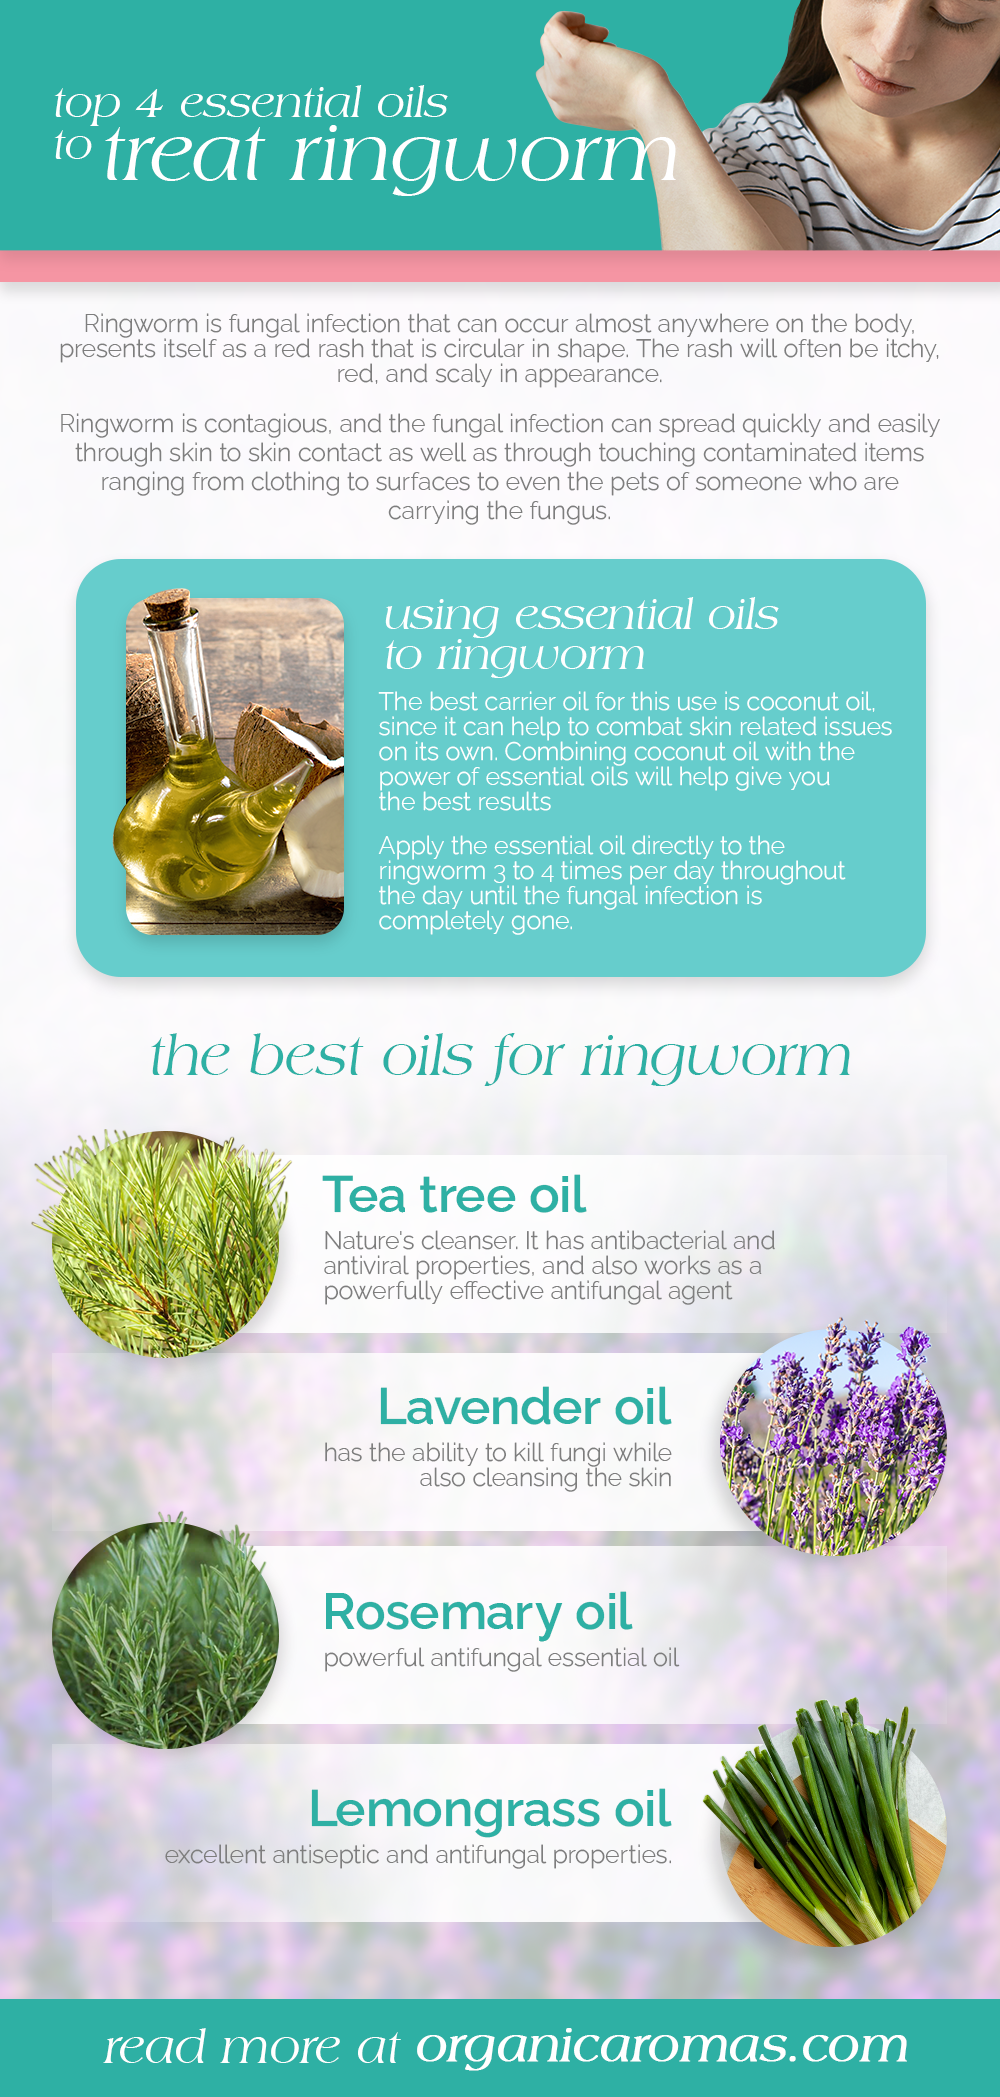 Antifungal properties of tea tree oil